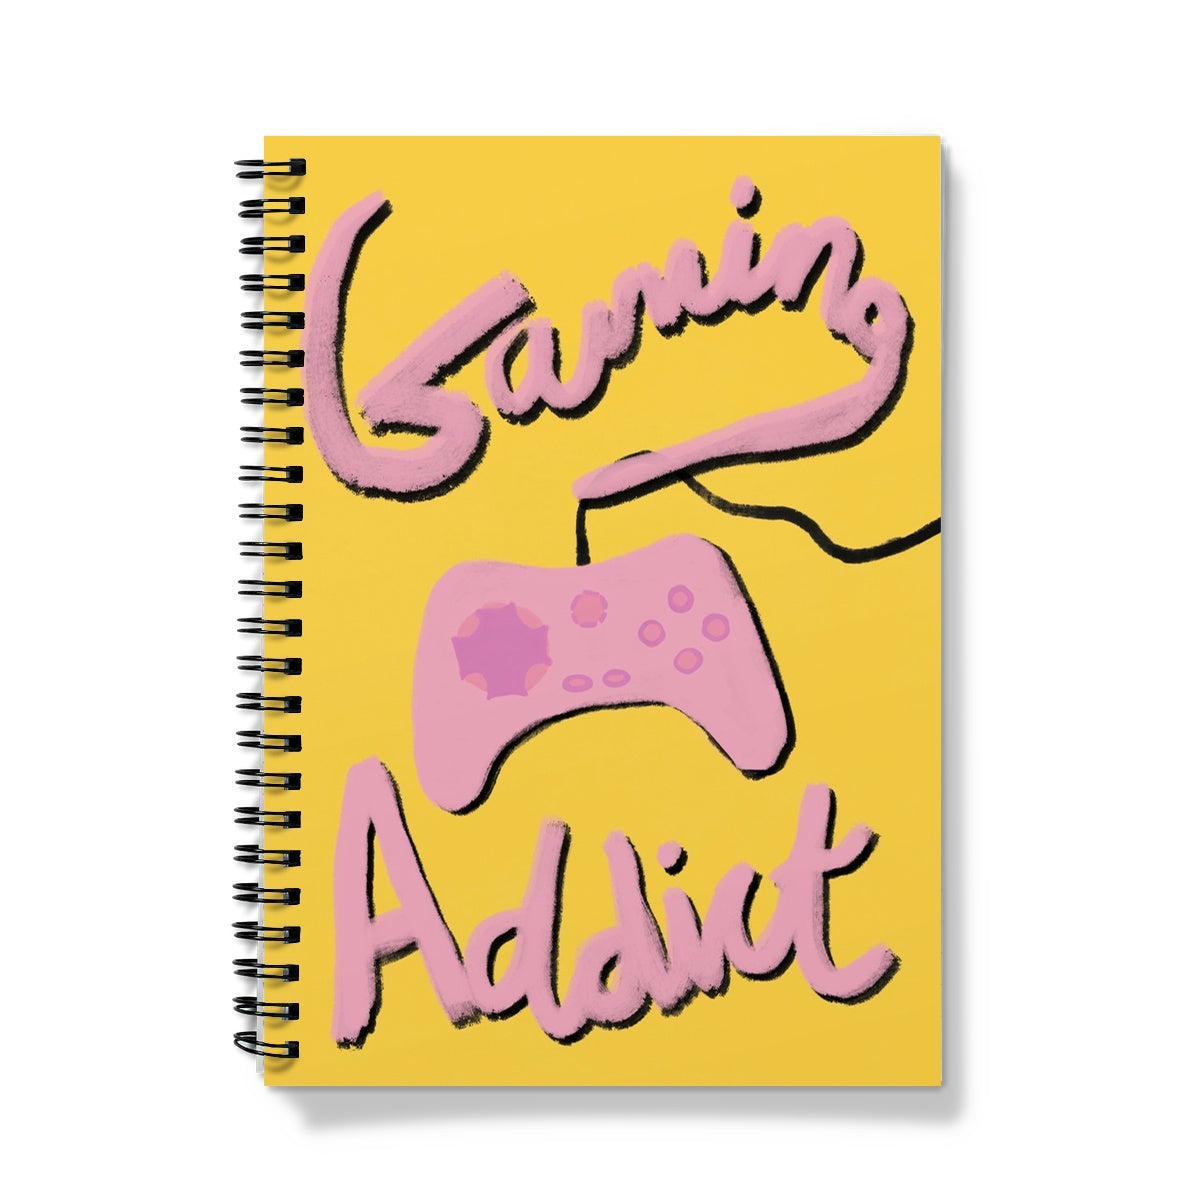 Gaming Addict Print - Yellow, Pink Notebook